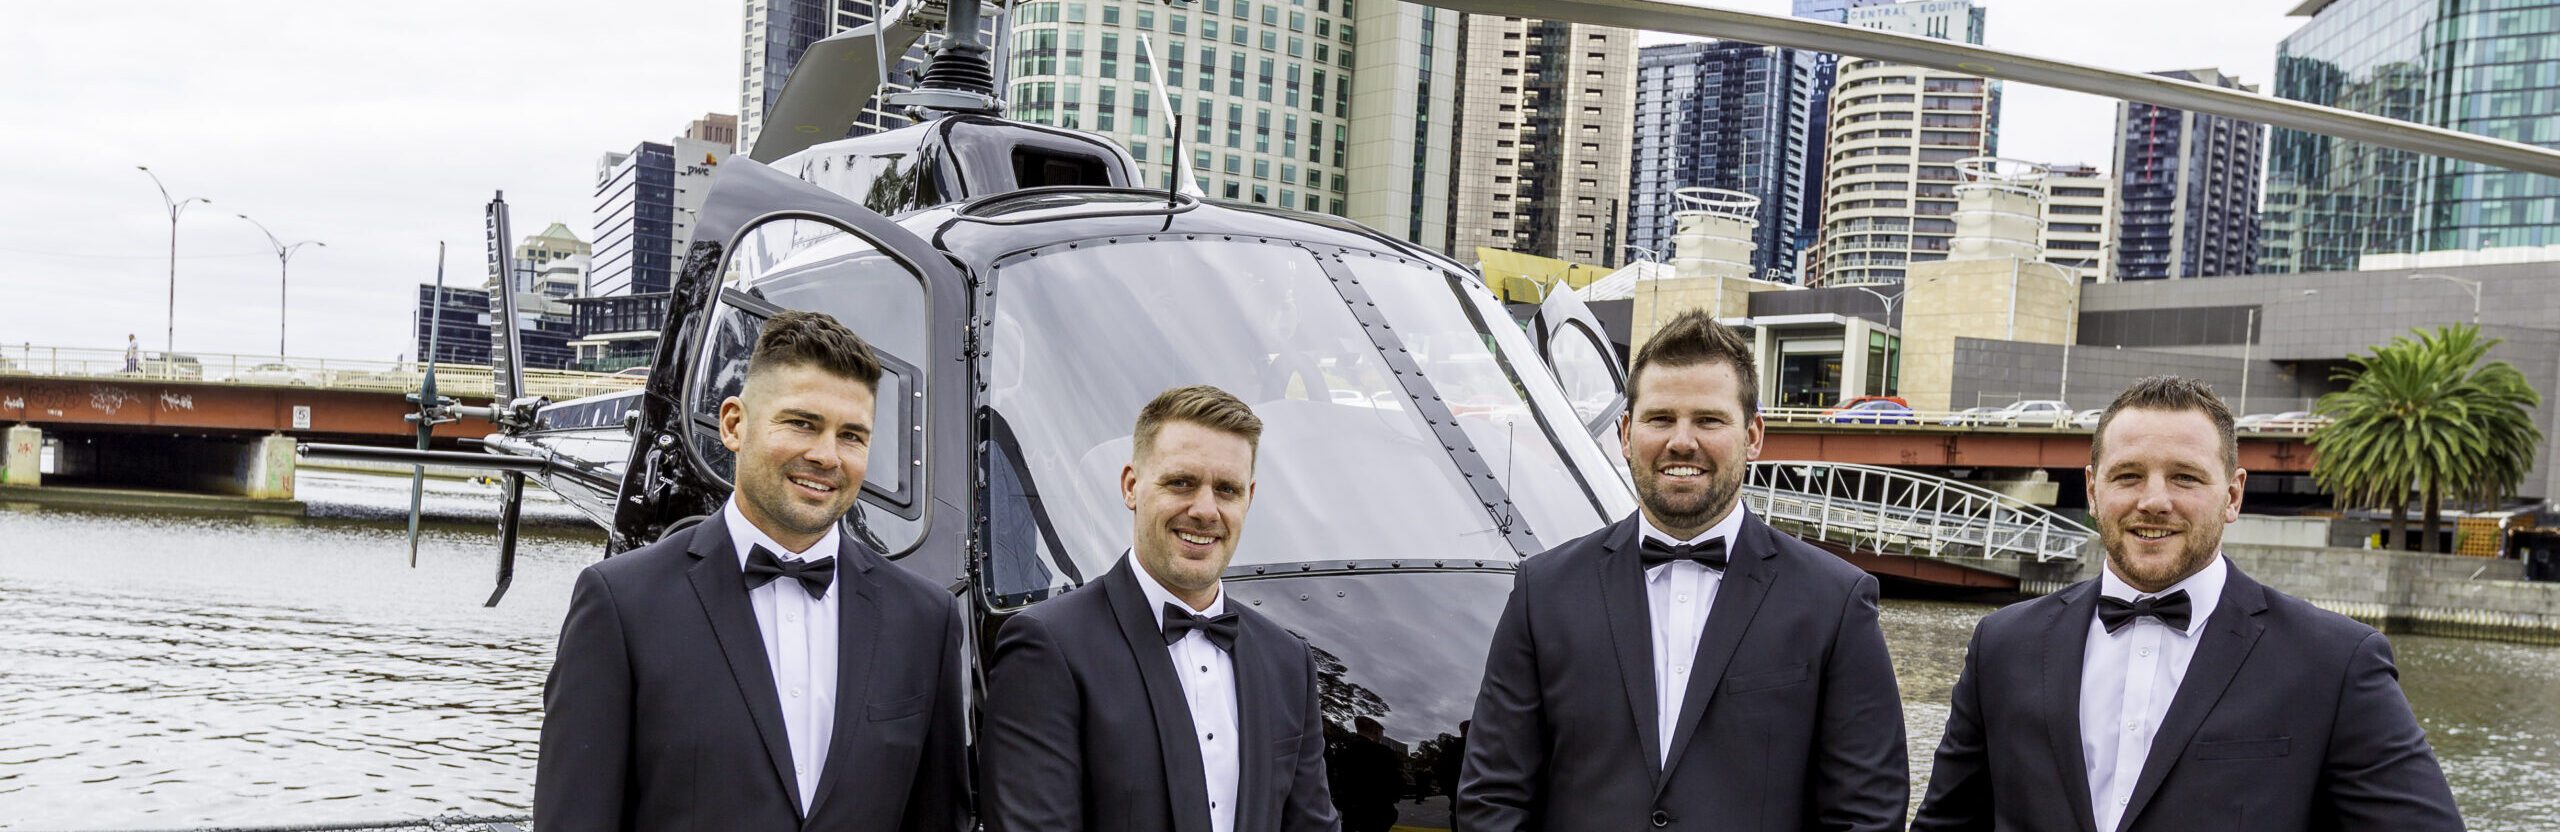 Helicopter Weddings, Micro Wedding, Elopements, Elope in Victoria